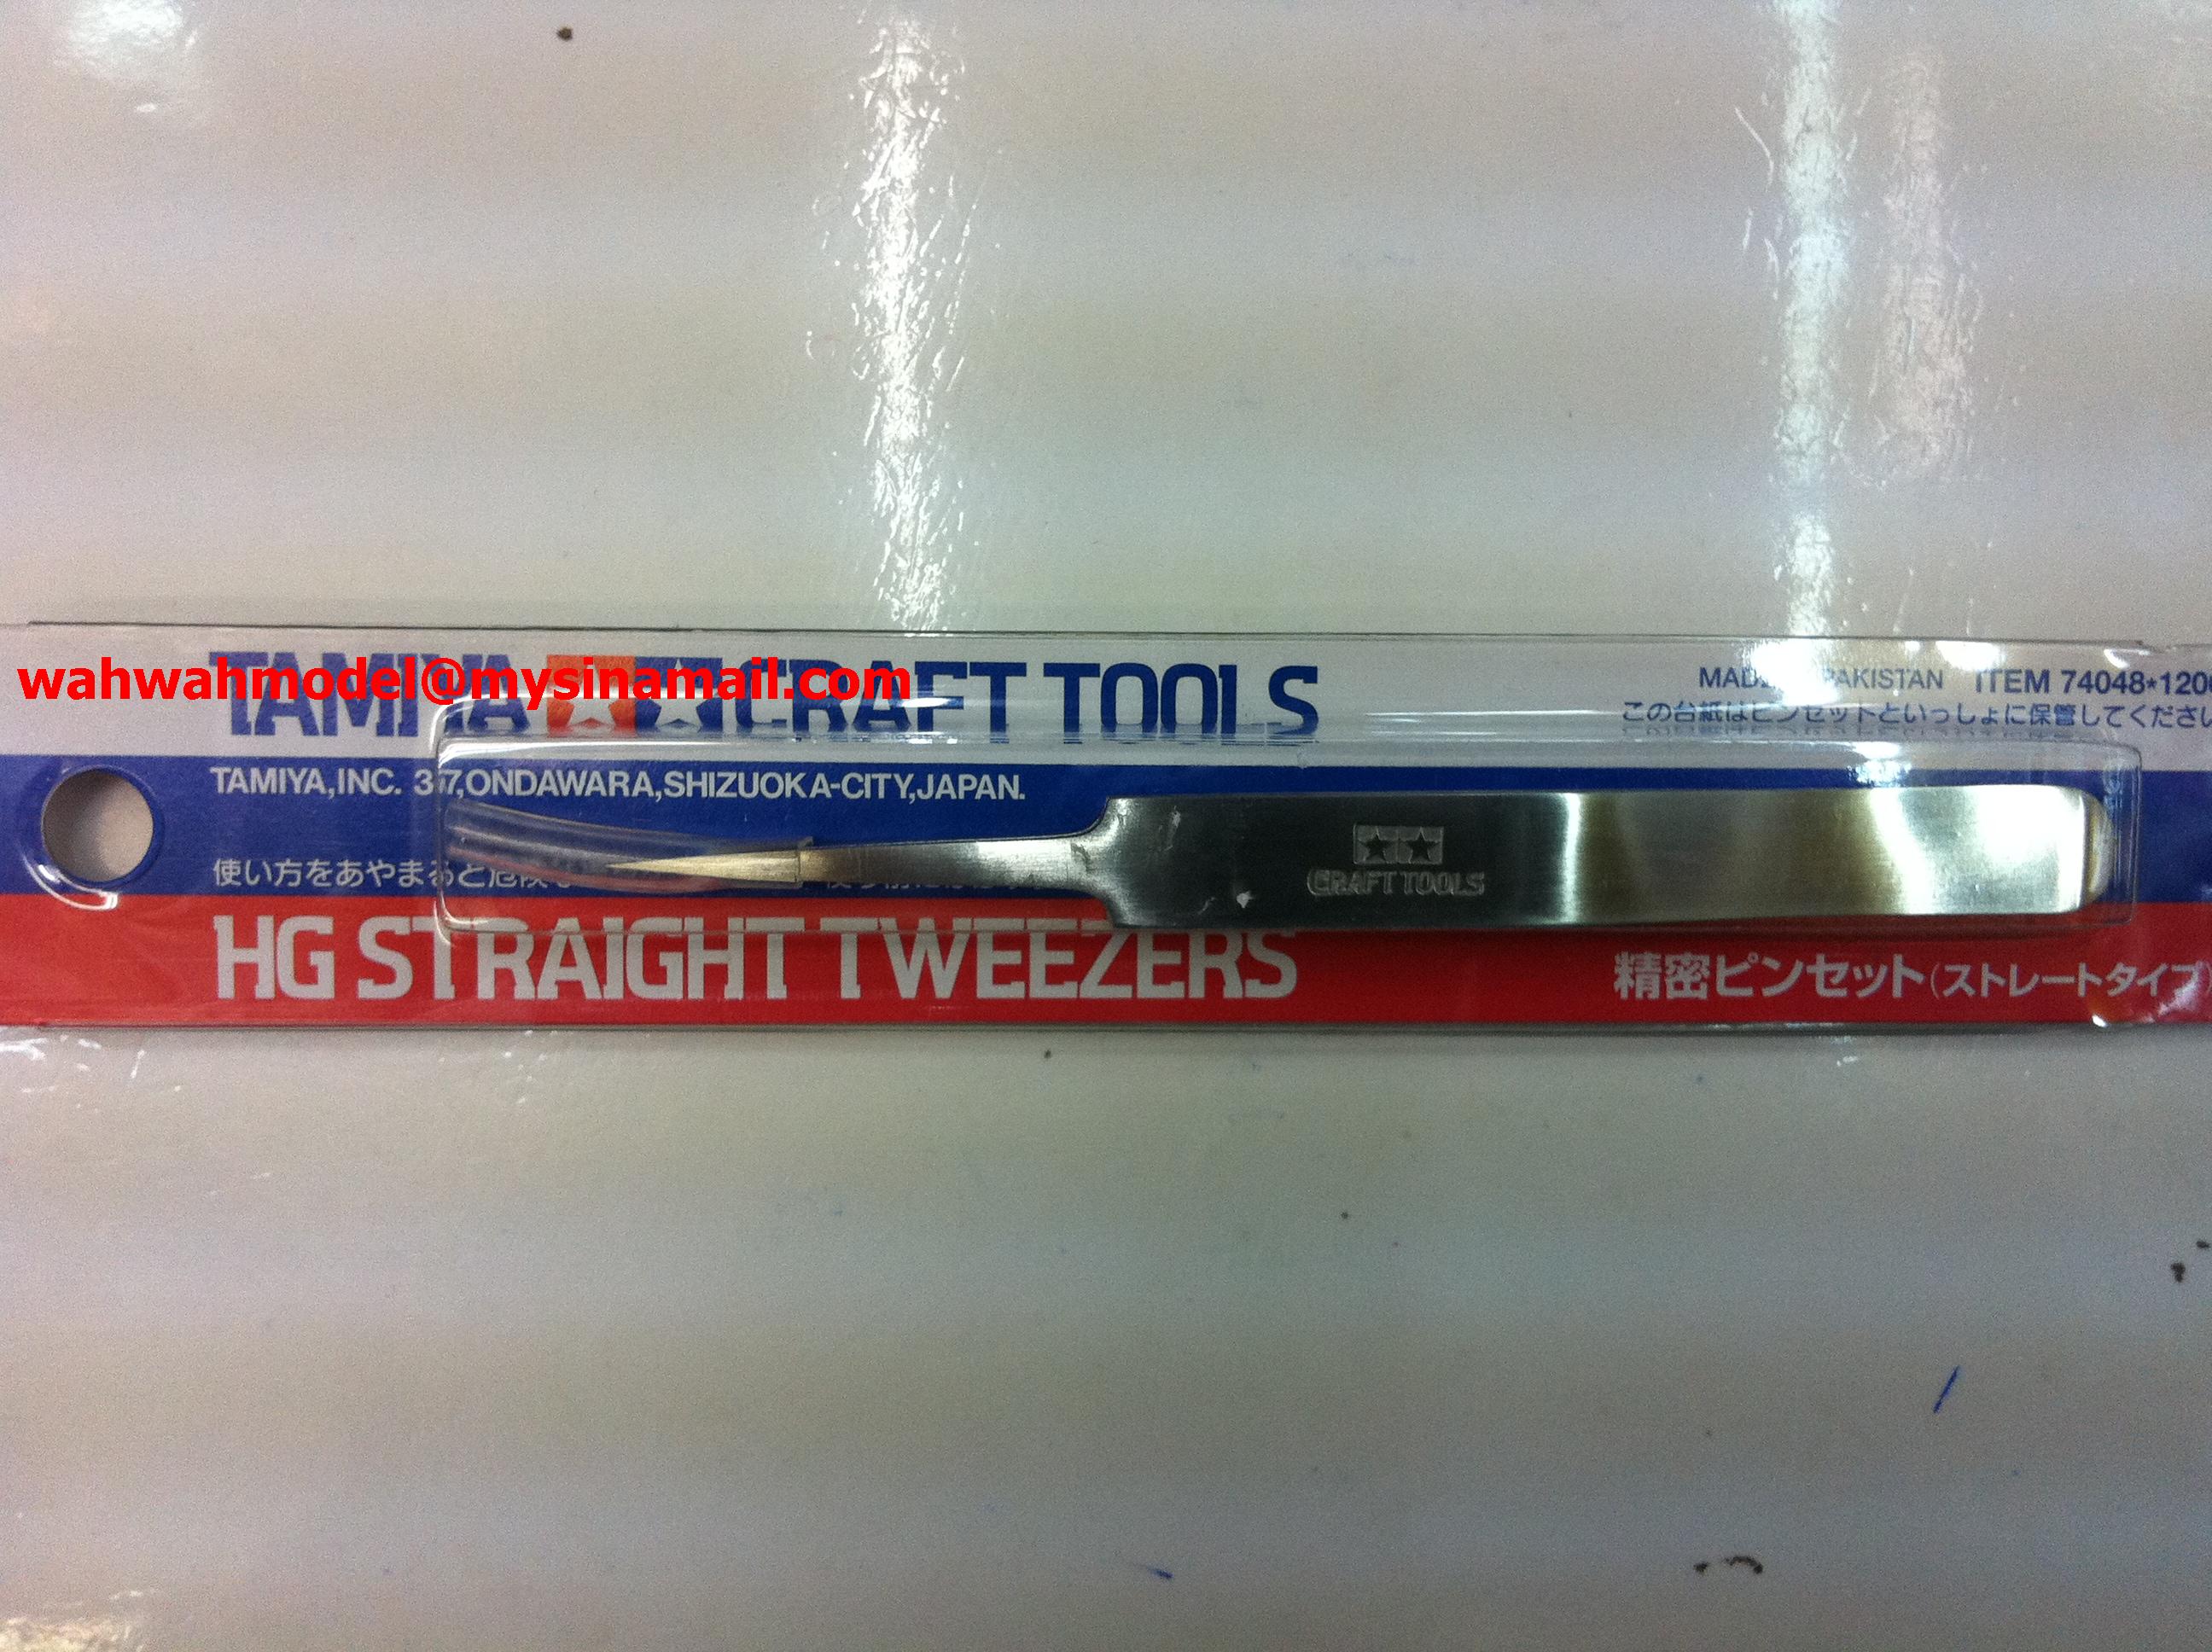 Tamiya 74048 Craft Tools HG Straight Tweezers